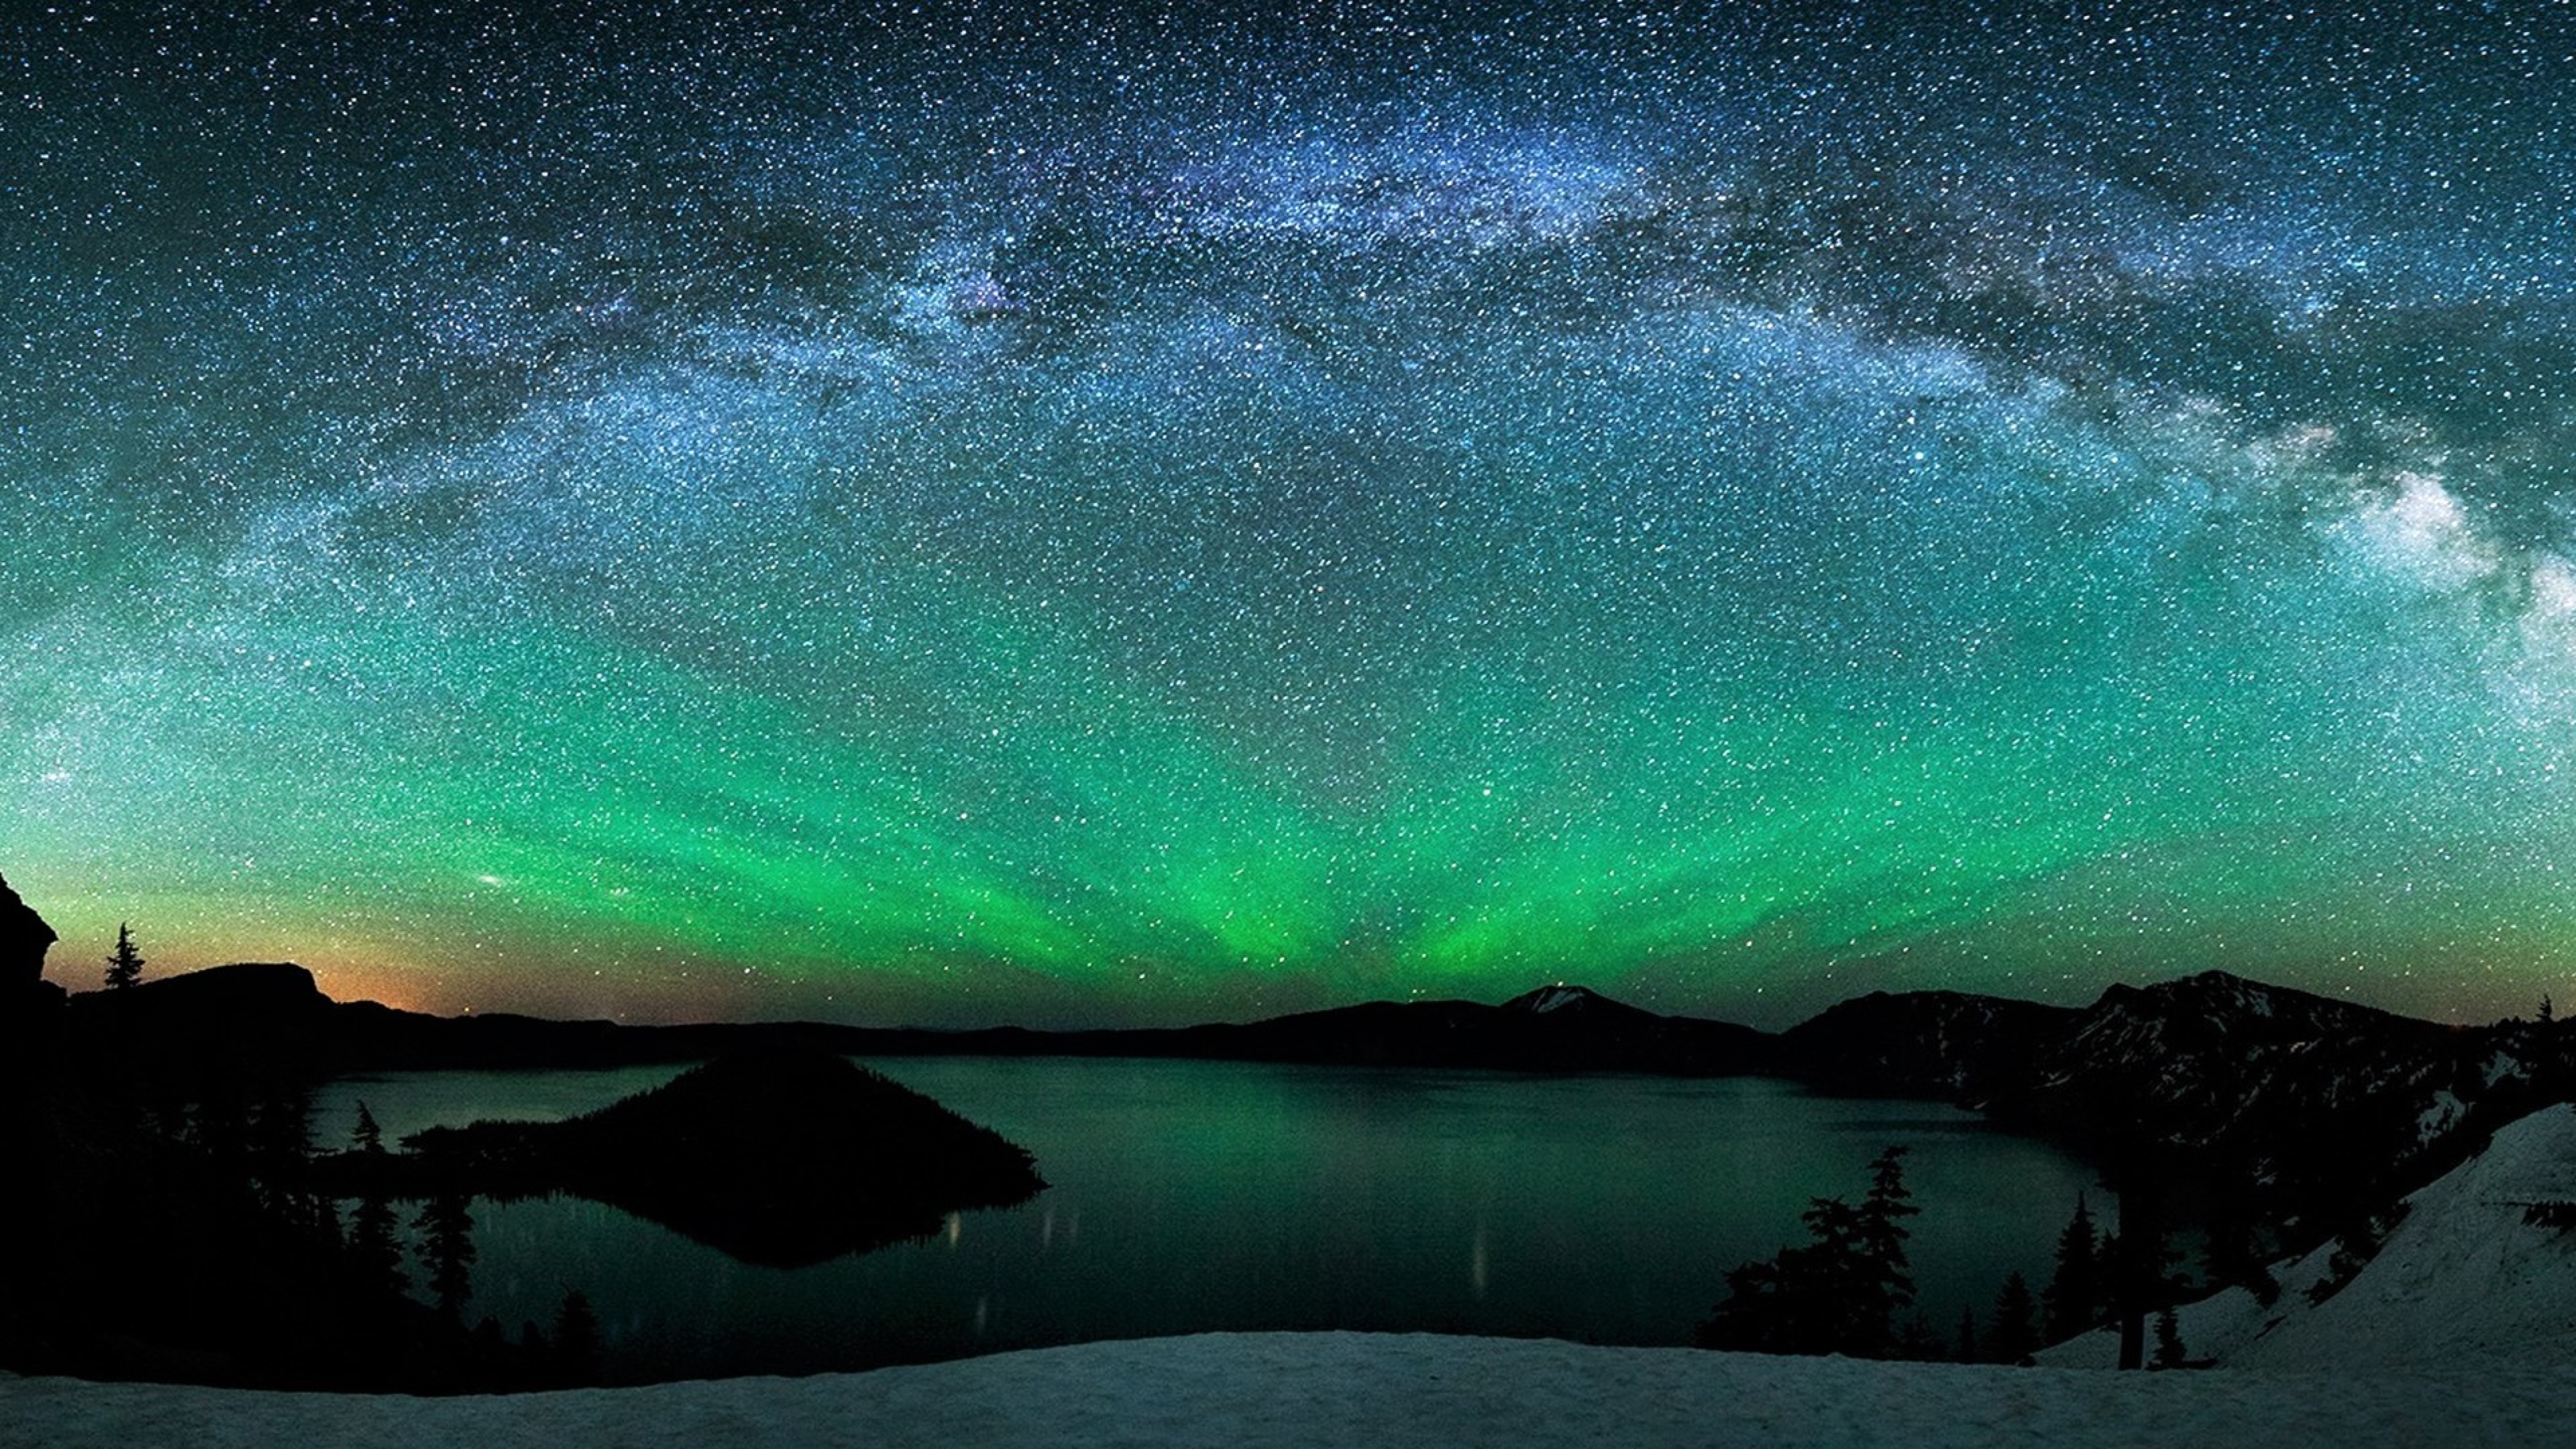 5120x2880 Aurora Borealis Over Winter Lake 5k Wallpaper Hd Nature 4k